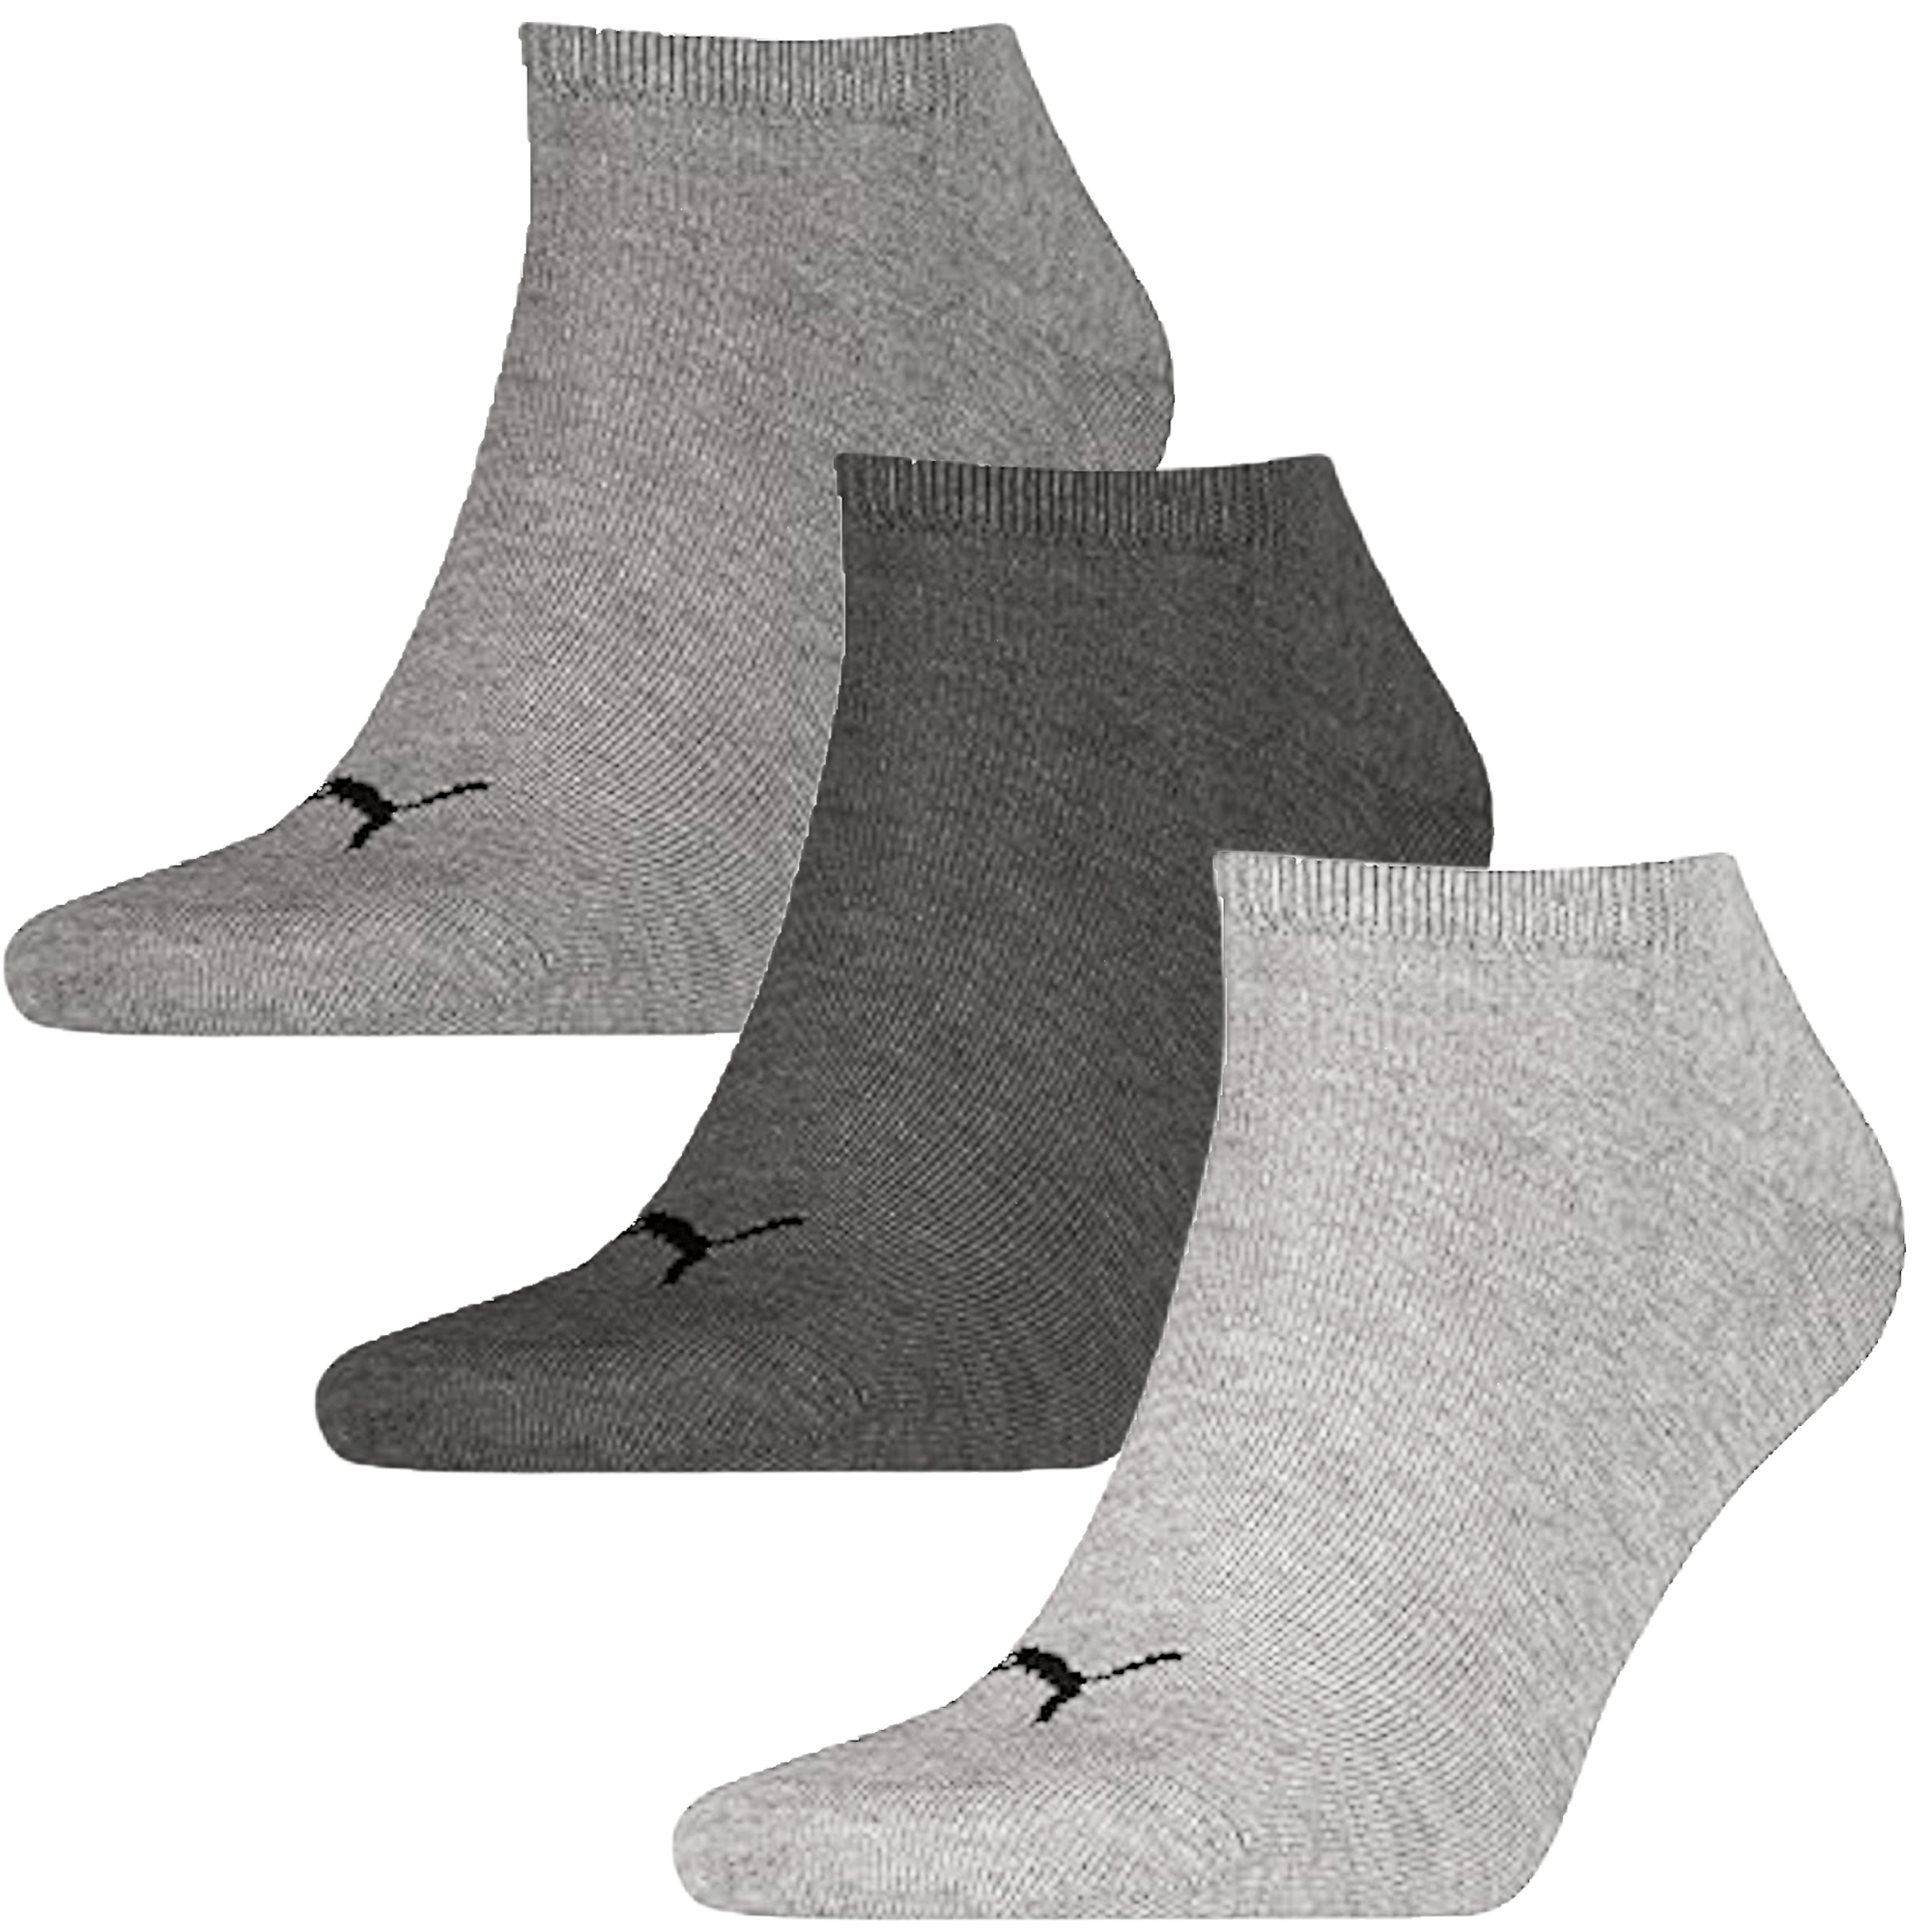 Puma Sneaker Socken  6 Paar 3 Farben Größe 47-49 Strümpfe 6-Pack